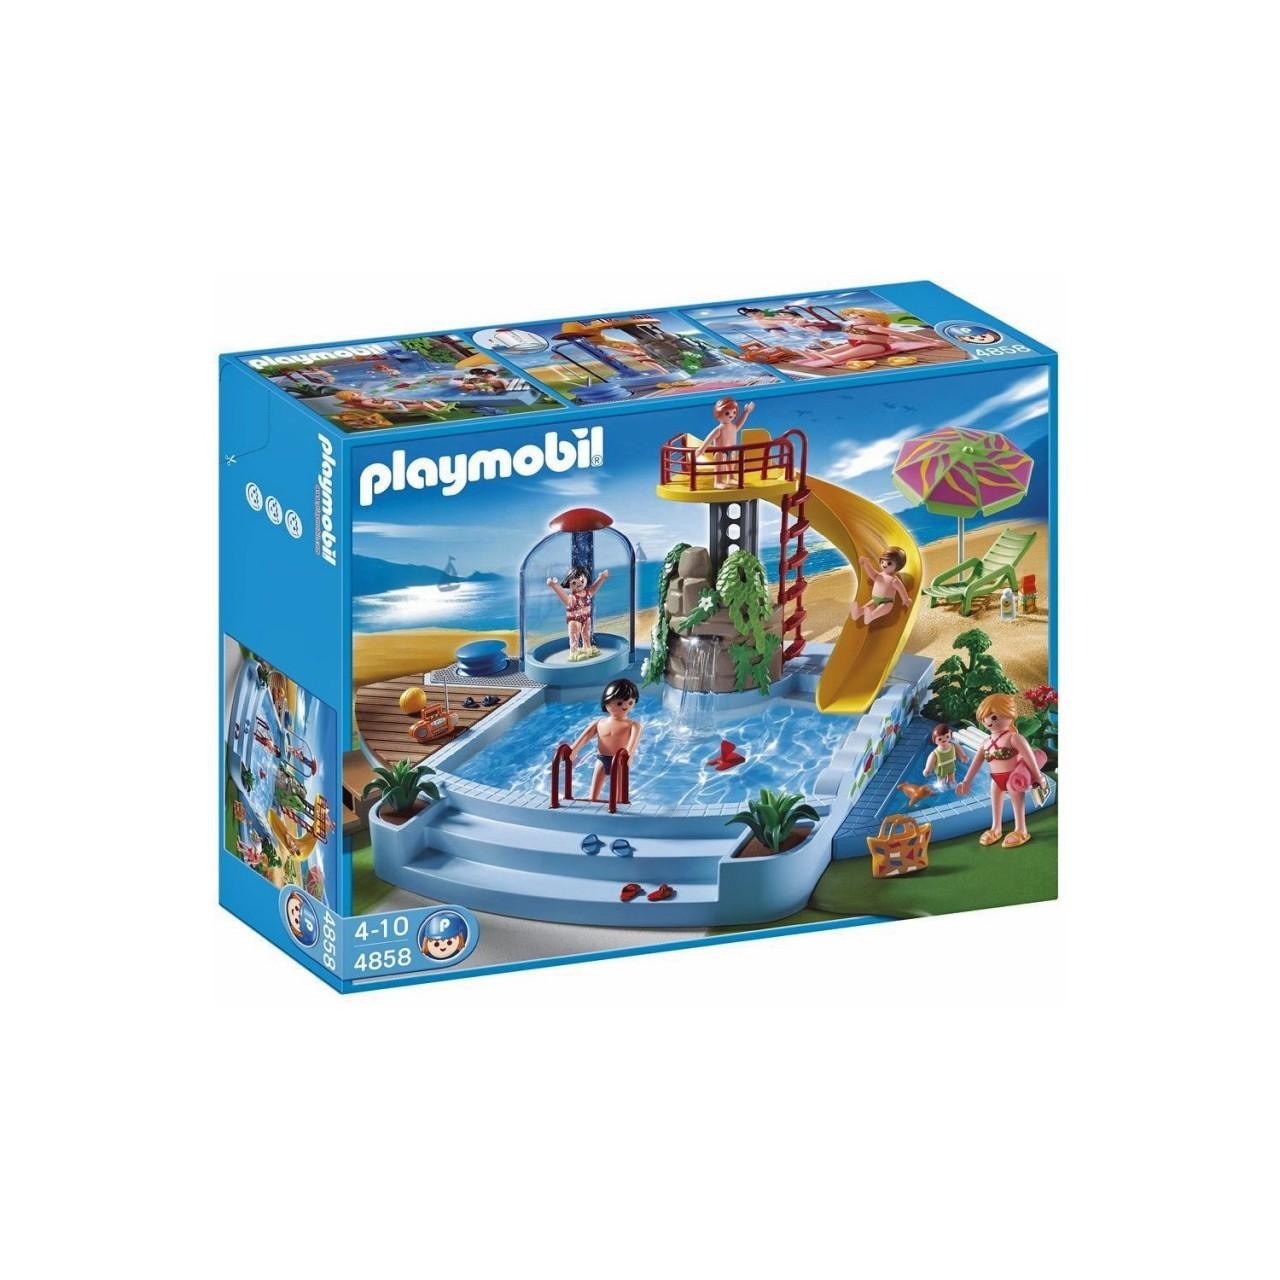 Foto Playmobil 4858 Pool with Water Slide foto 41072